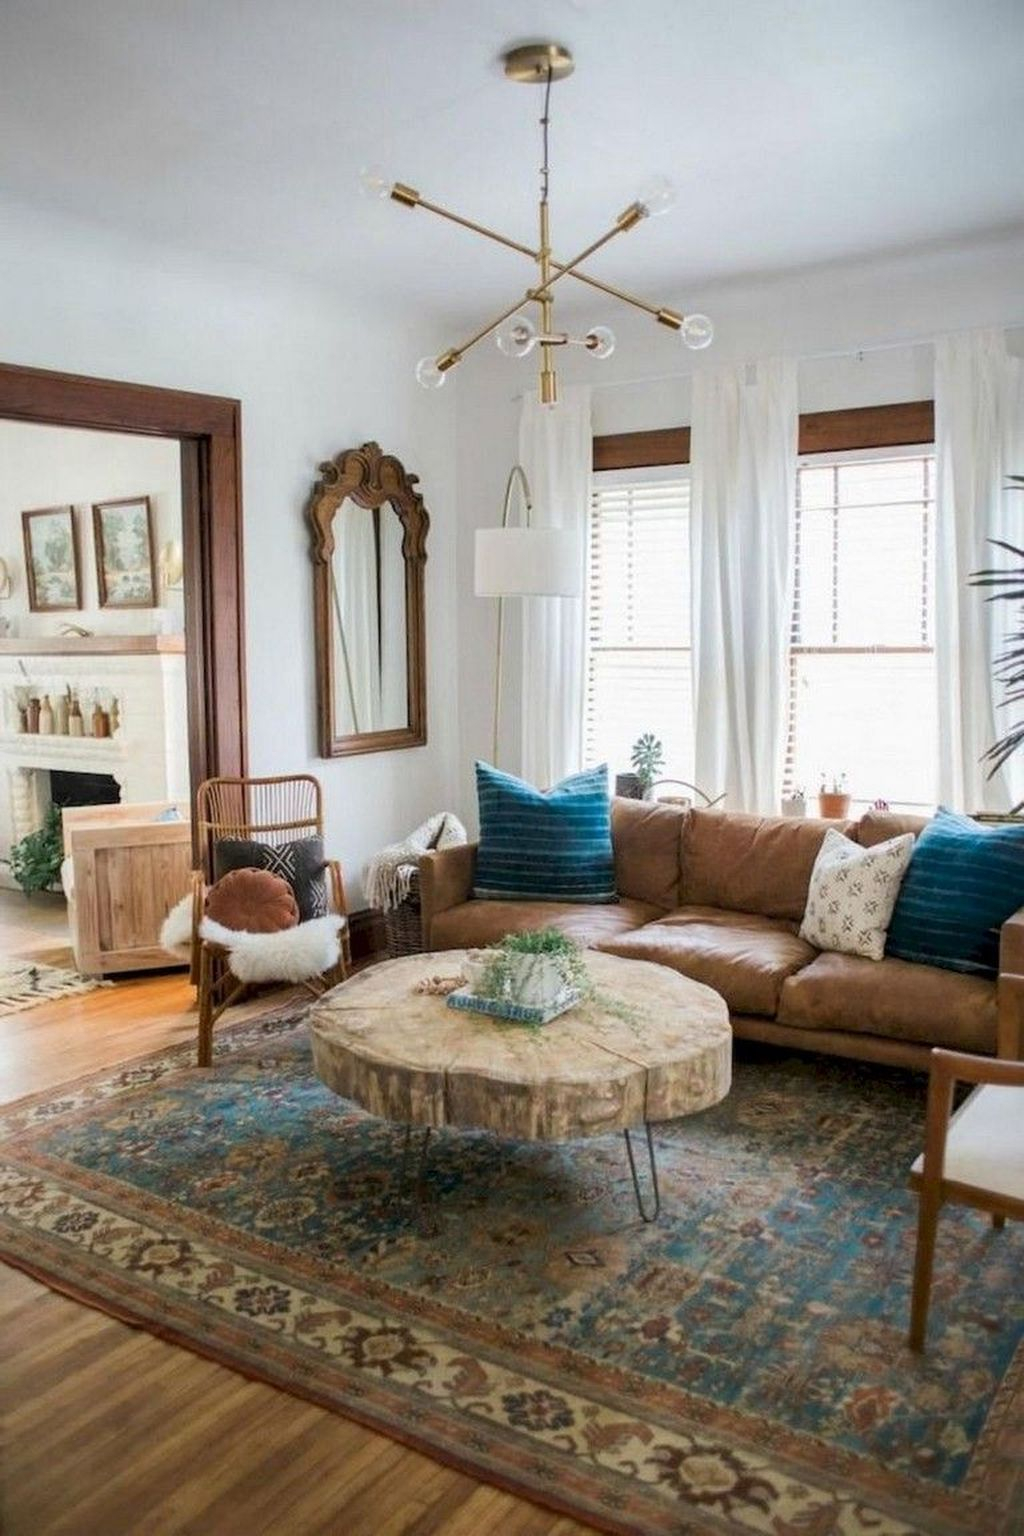 Excellent Furniture Design Ideas For Your Living Room 01